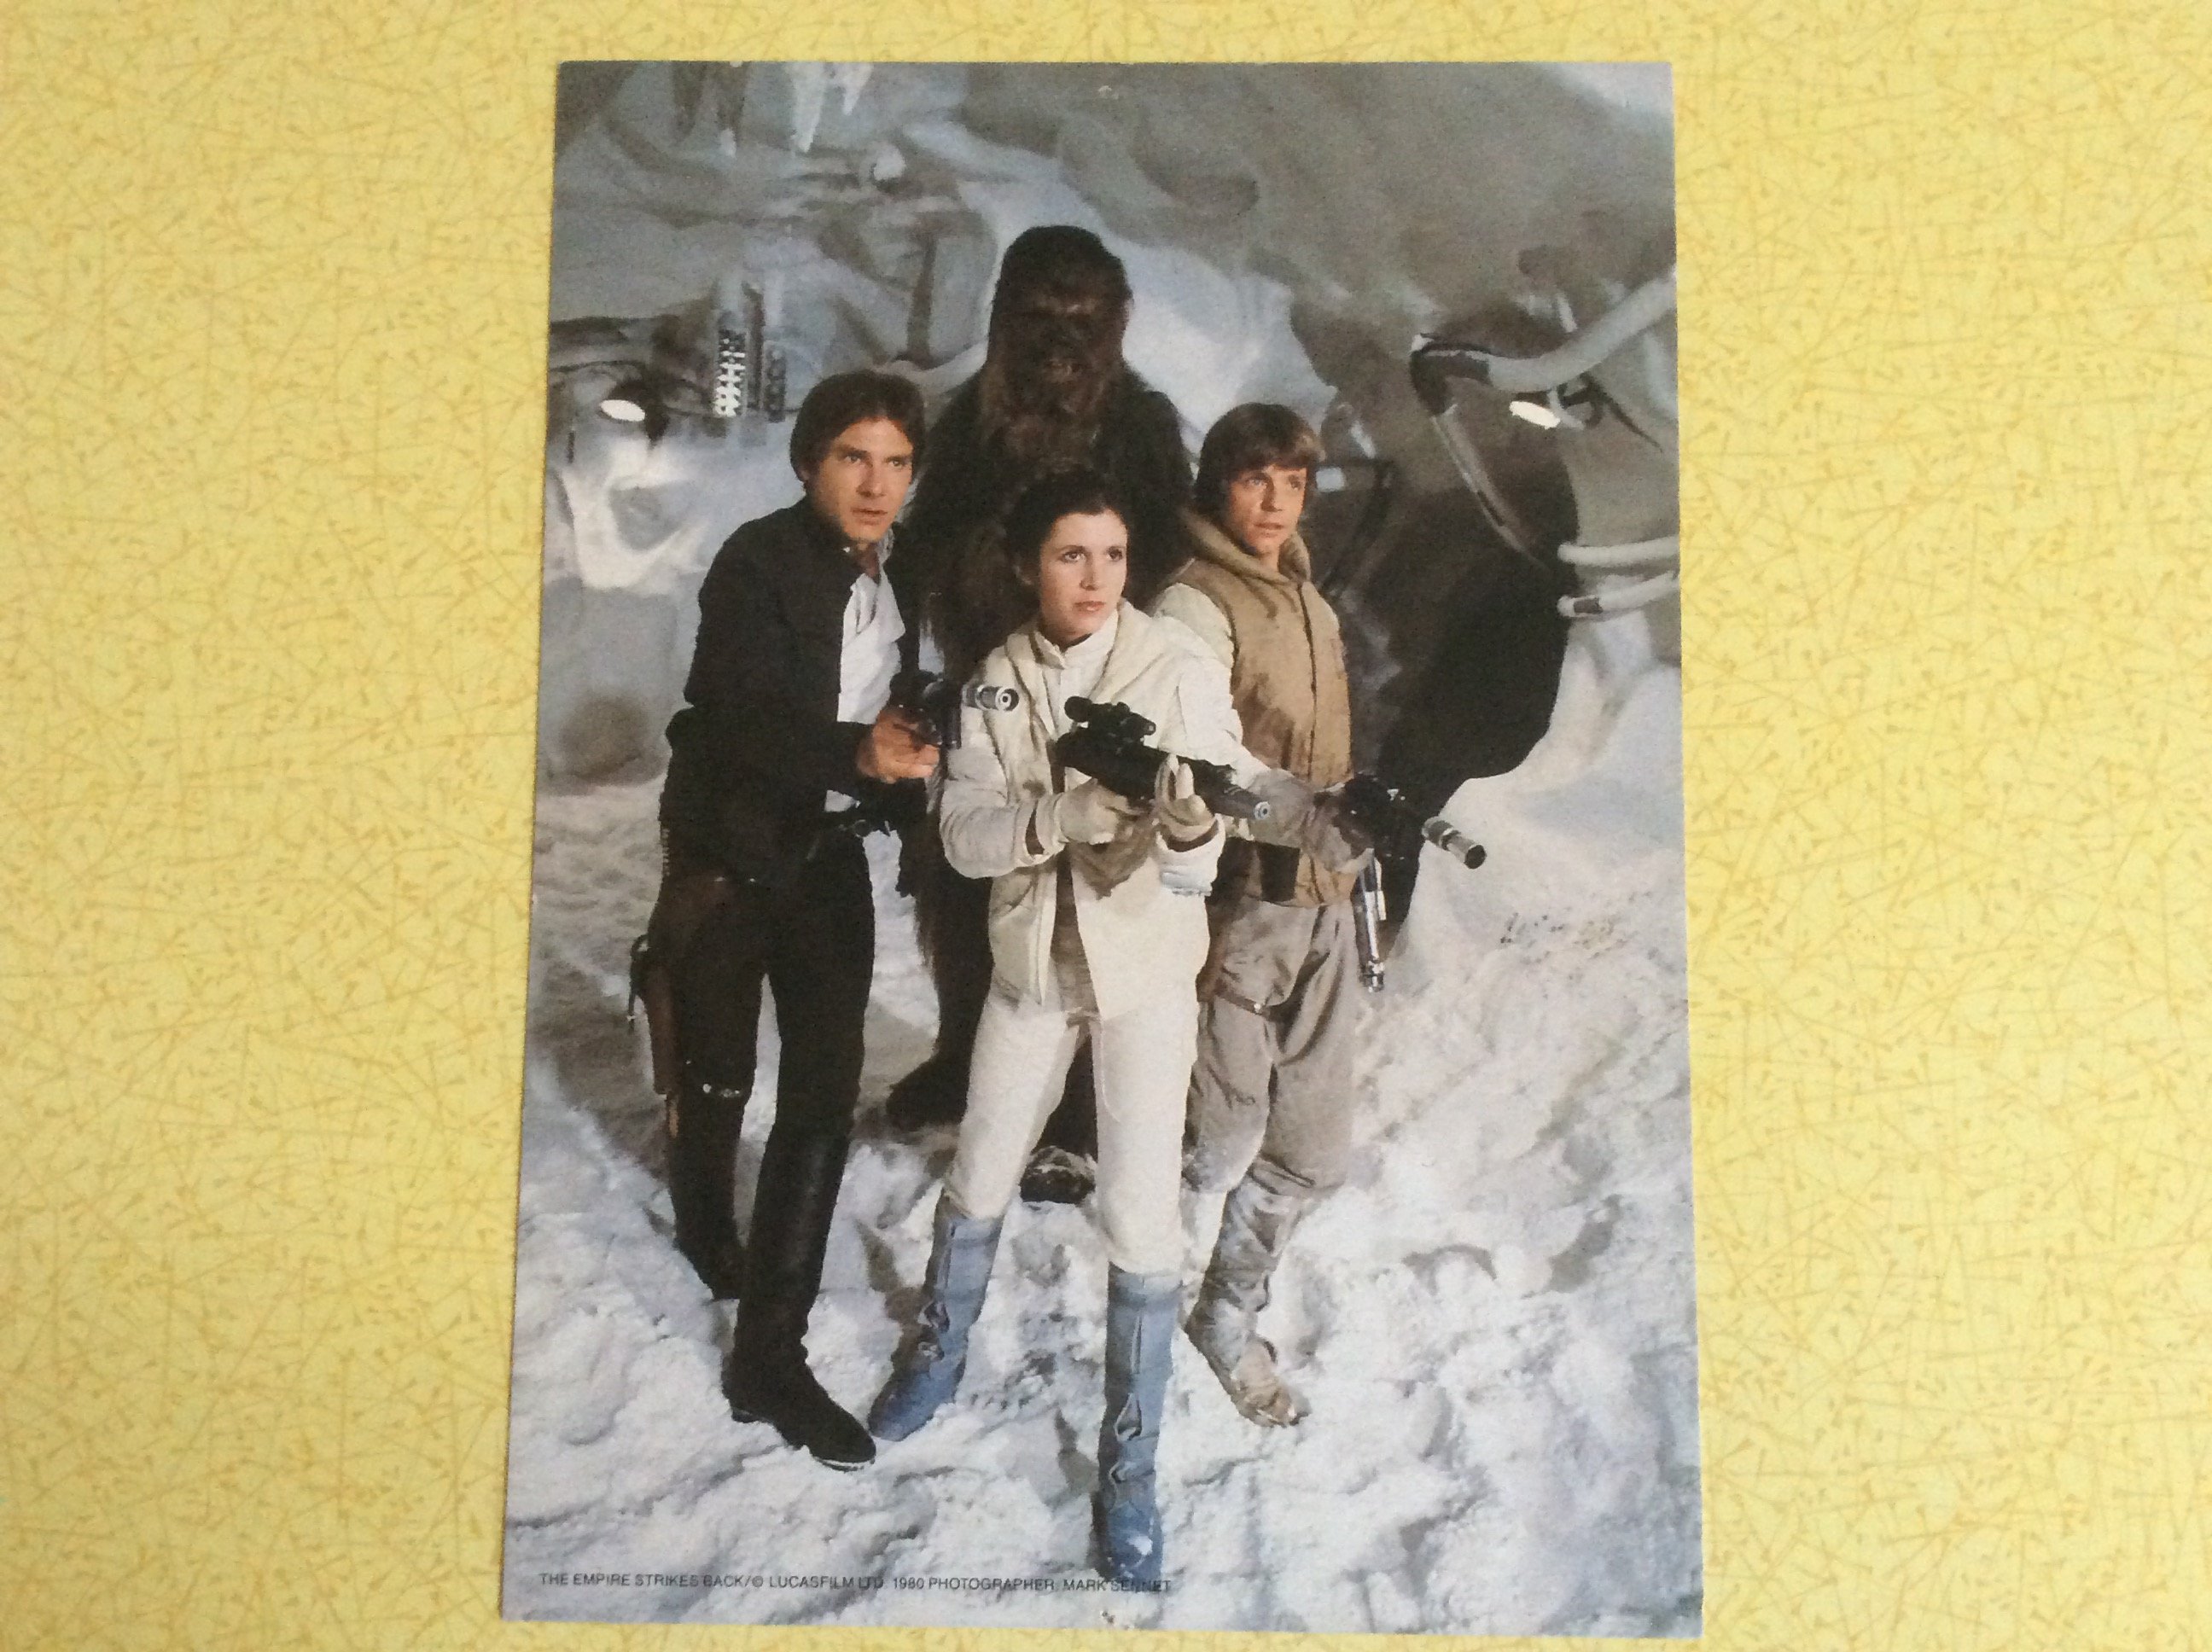 STAR WARS Movie Poster empire strikes back Lukasfilm 1980 20x27 - Zberateľstvo